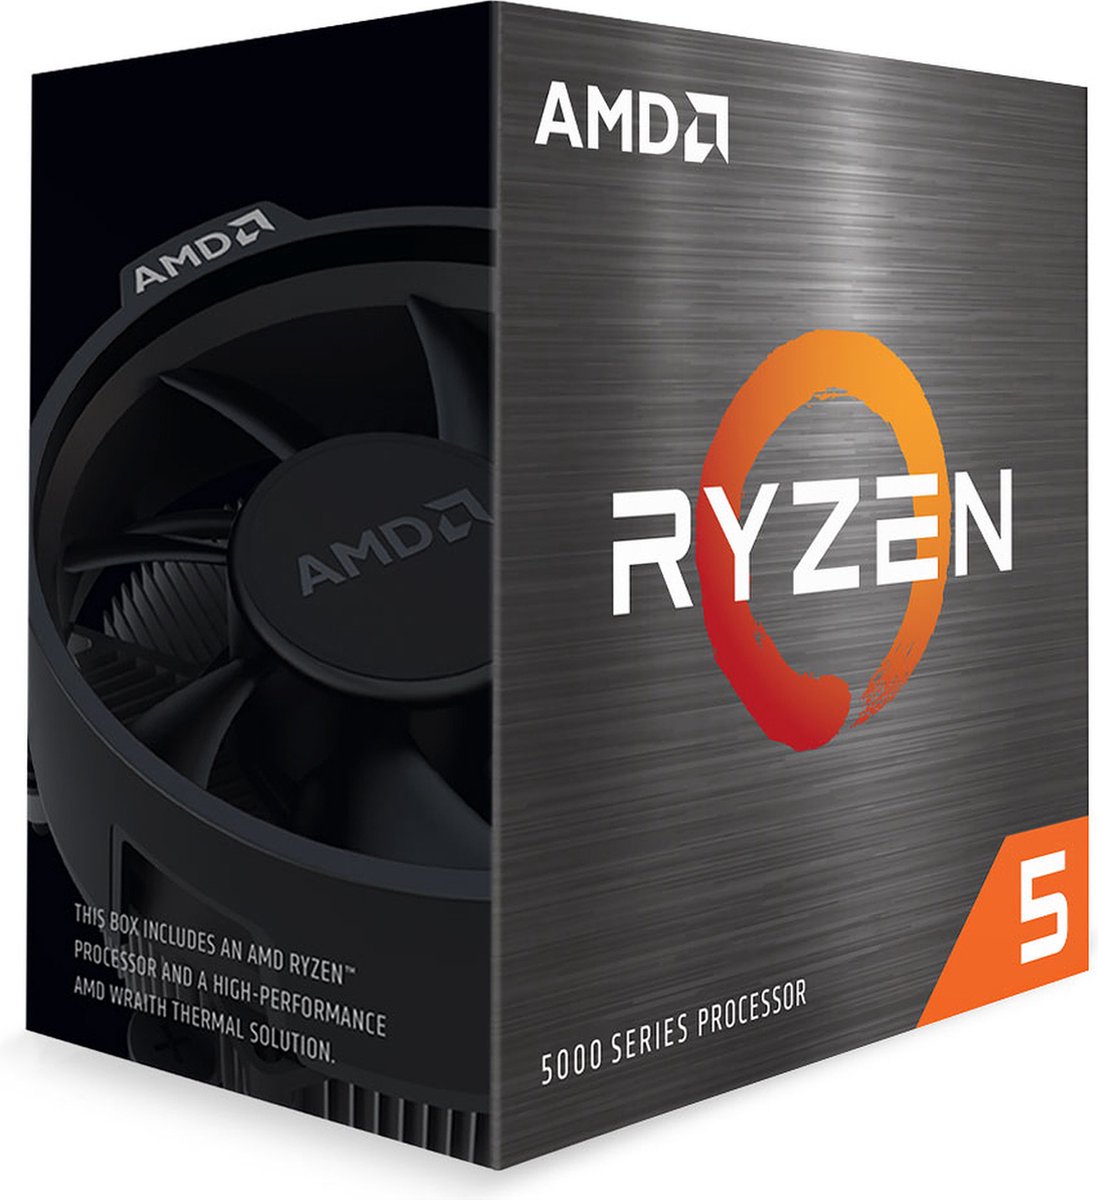 PC de Gaming RVB Séparation, AMD Ryzen 5 - 4500